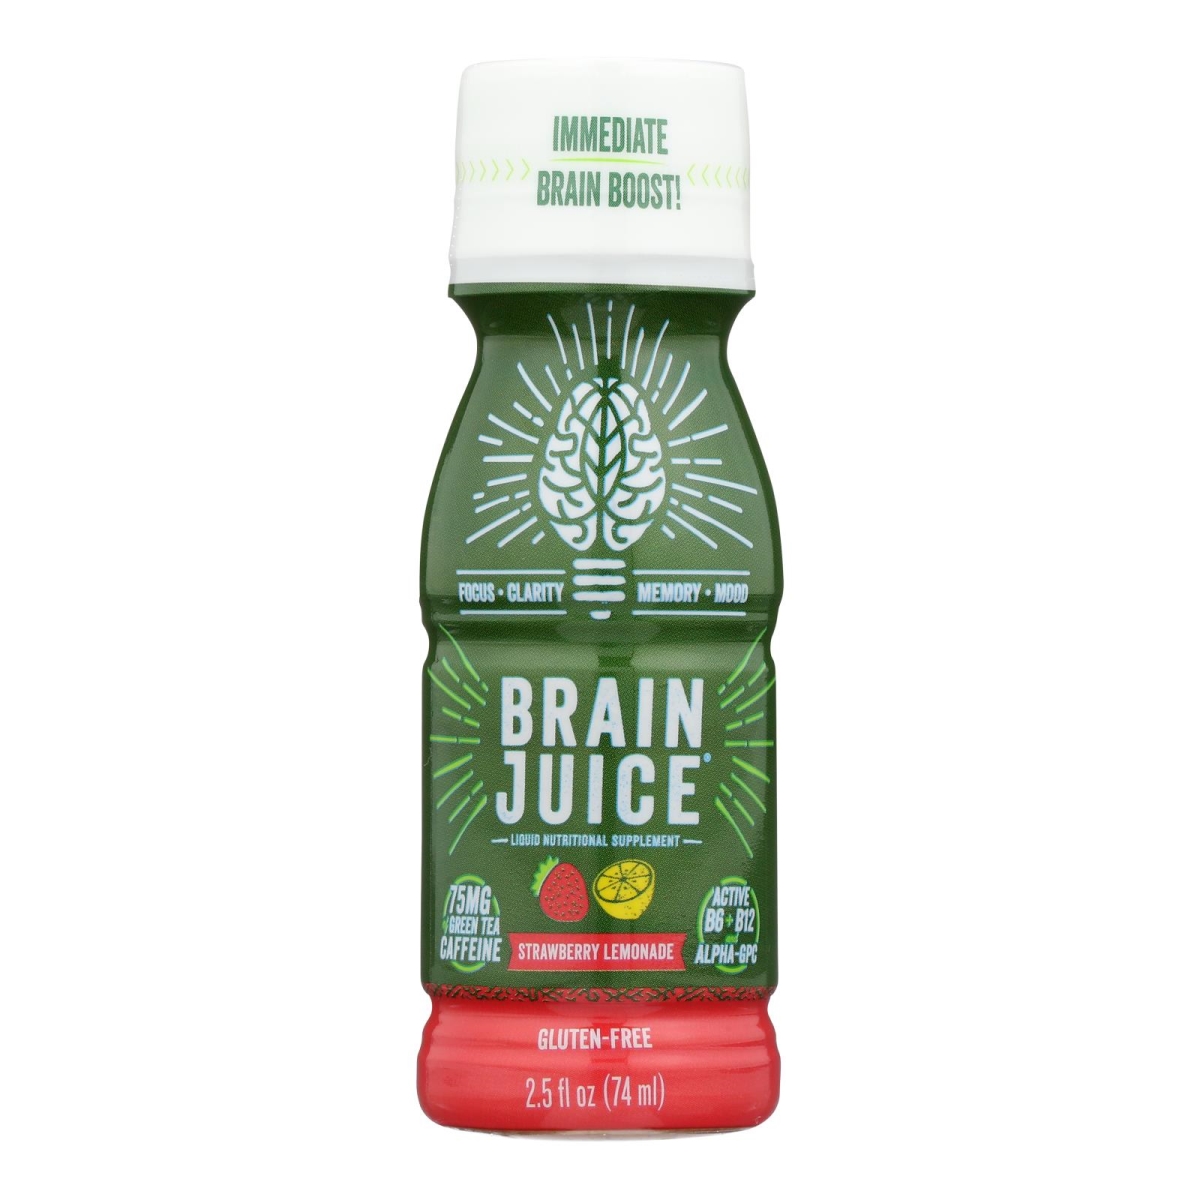 Picture of Brainjuice HG2463198 2.5 fl oz Strawberry Lemonade Brain Juice - Case of 12